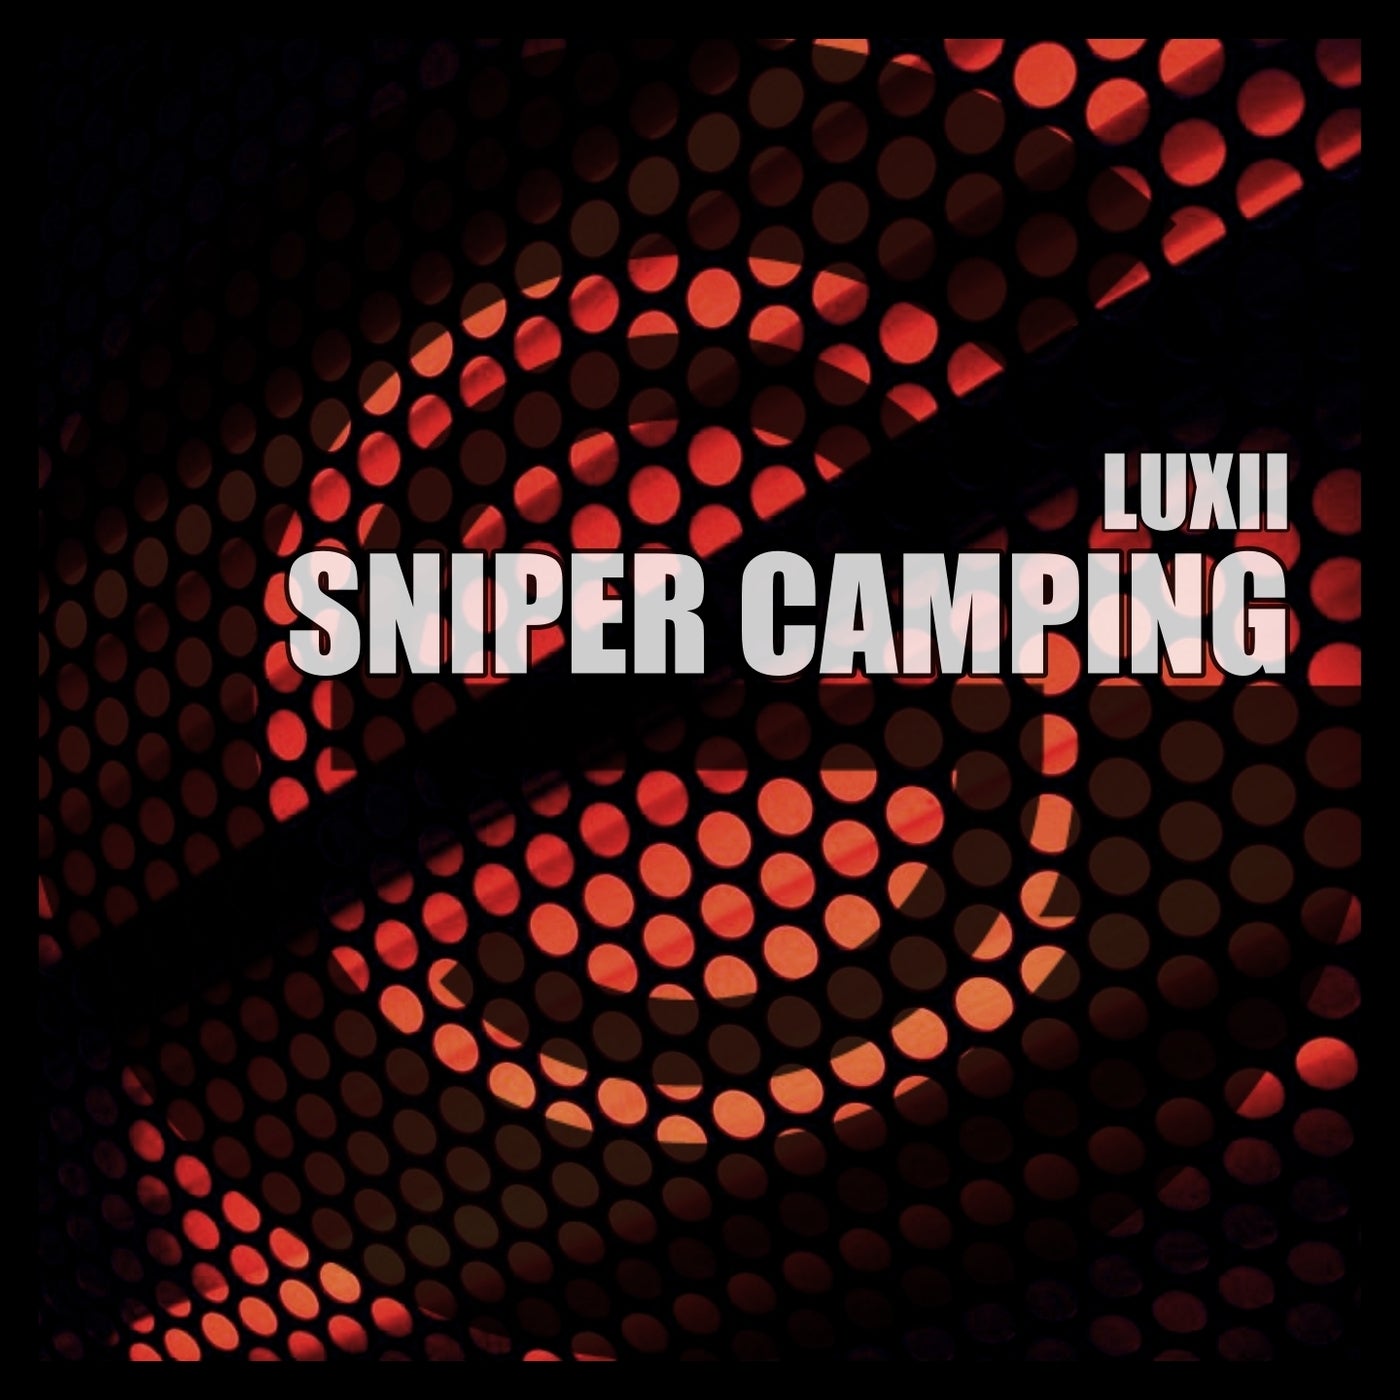 Sniper Camping